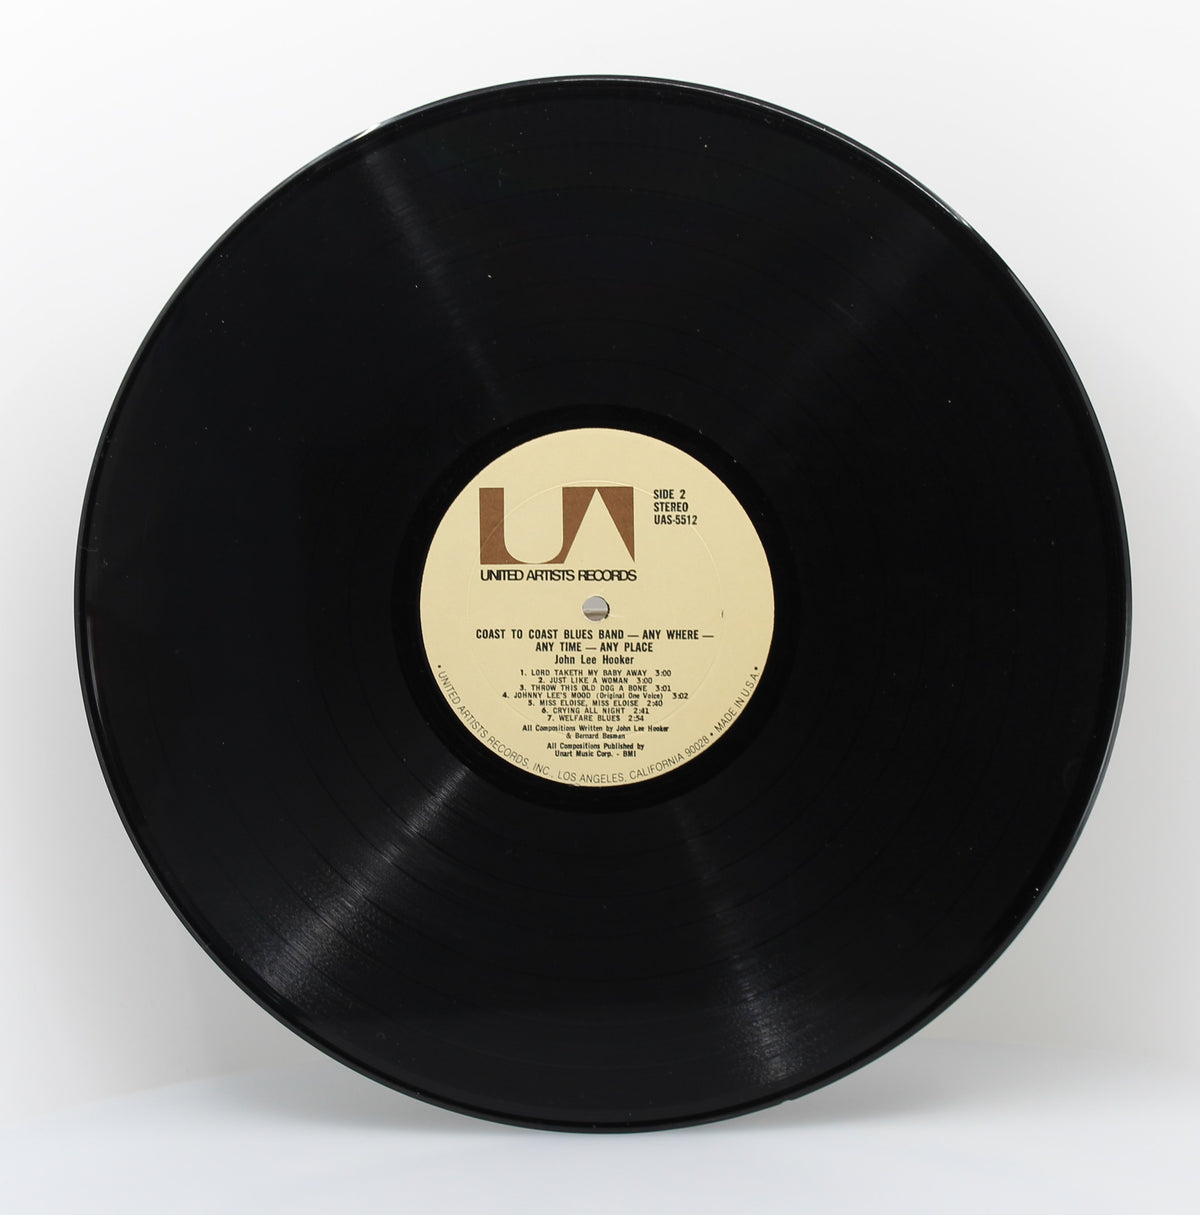 John Lee Hooker / Coast To Coast Blues Band – Any Where / Any Time / Any Place, Vinyl, LP, Album, Stereo, Gatefold, Blues, USA 1971